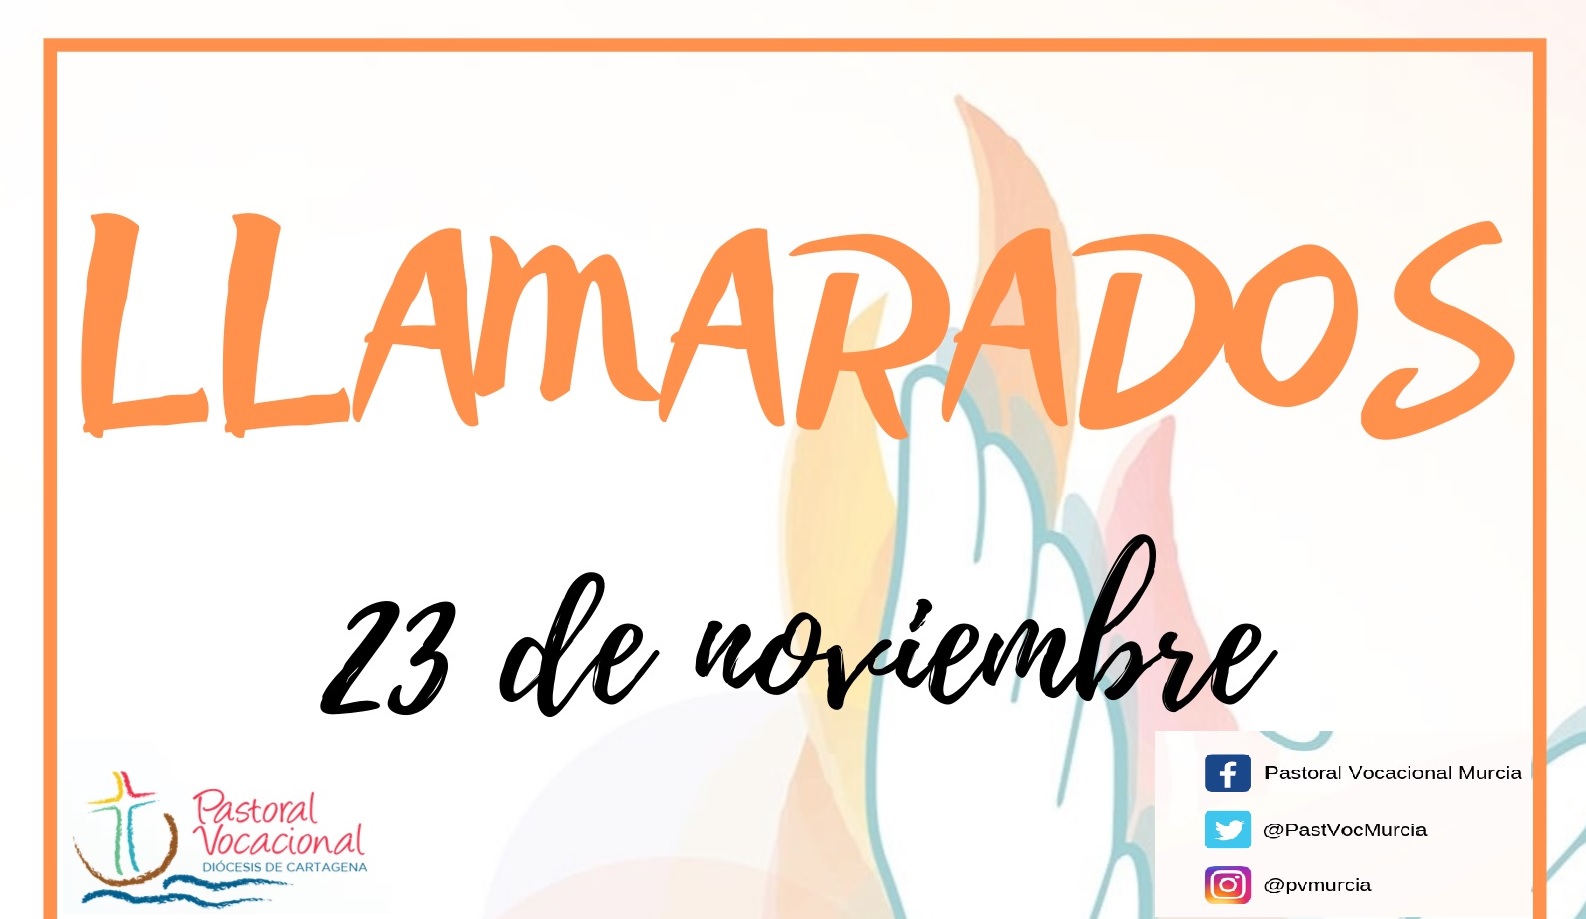 Cartel Llamarados 2019, Pastoral Vocacional Murcia, Diócesis de Cartagena, 2 jpg